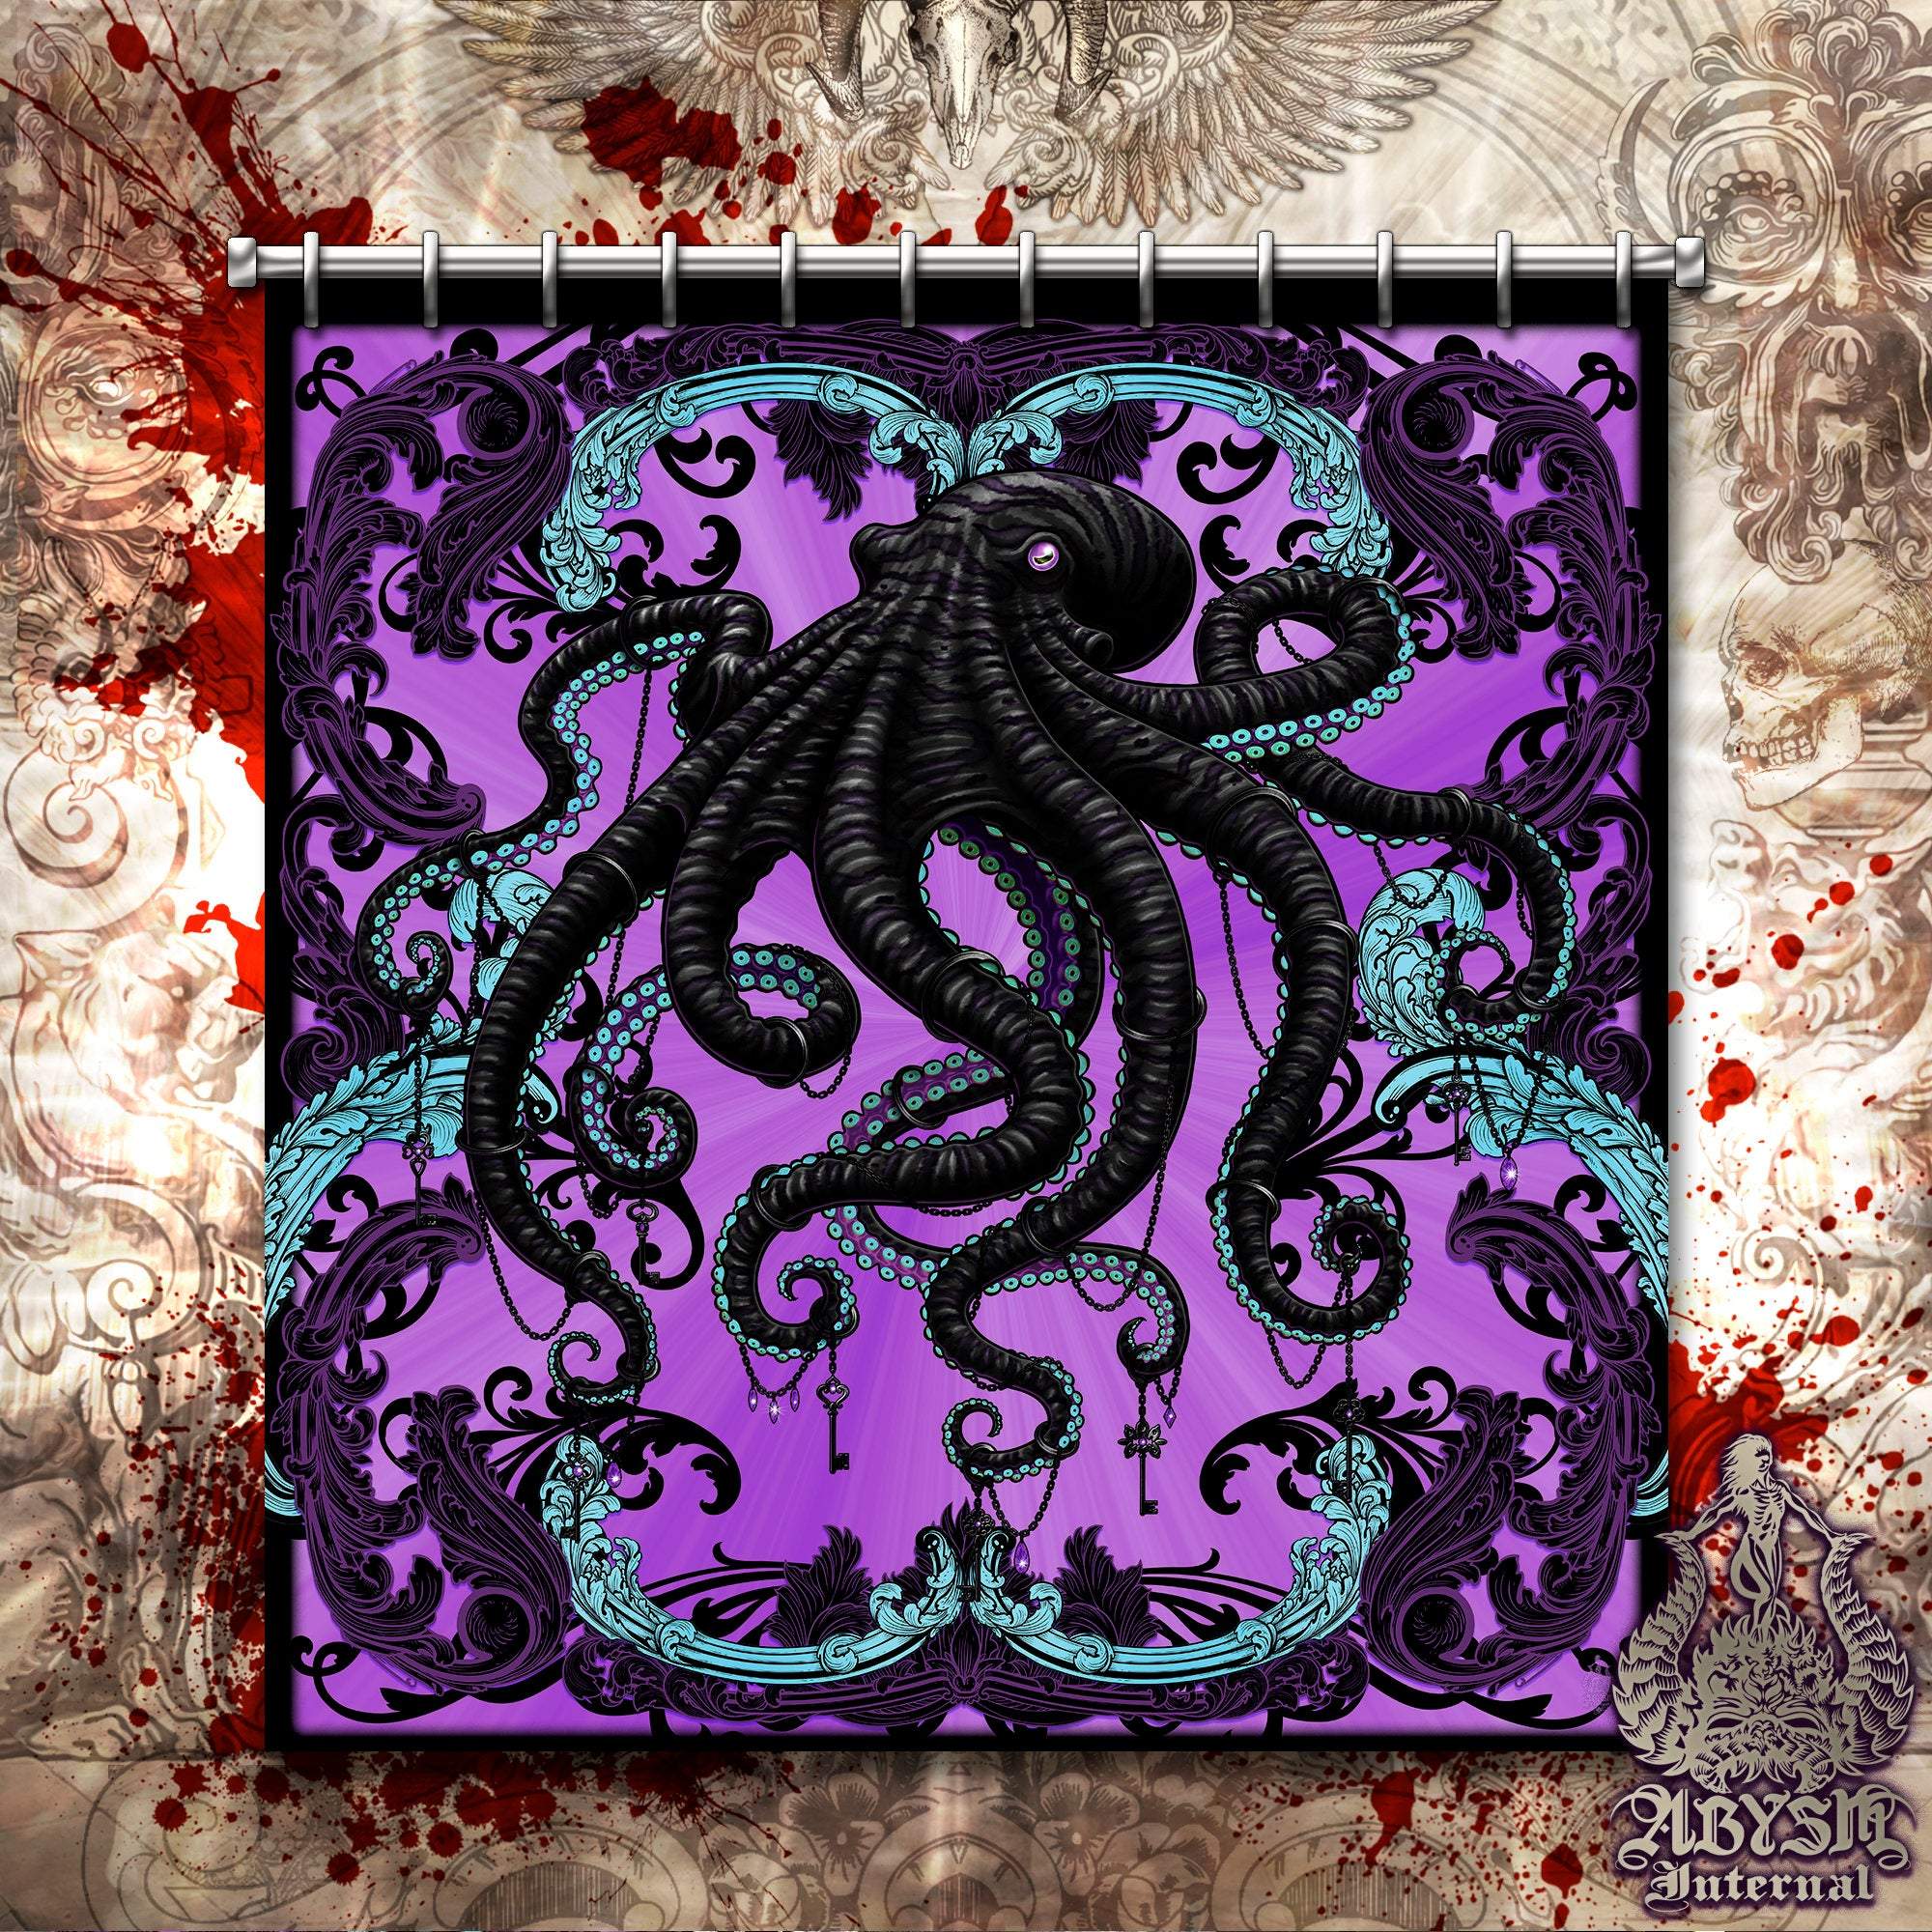 Pastel Goth Shower Curtain, Gothic Bathroom Decor - Black Octopus - Abysm Internal